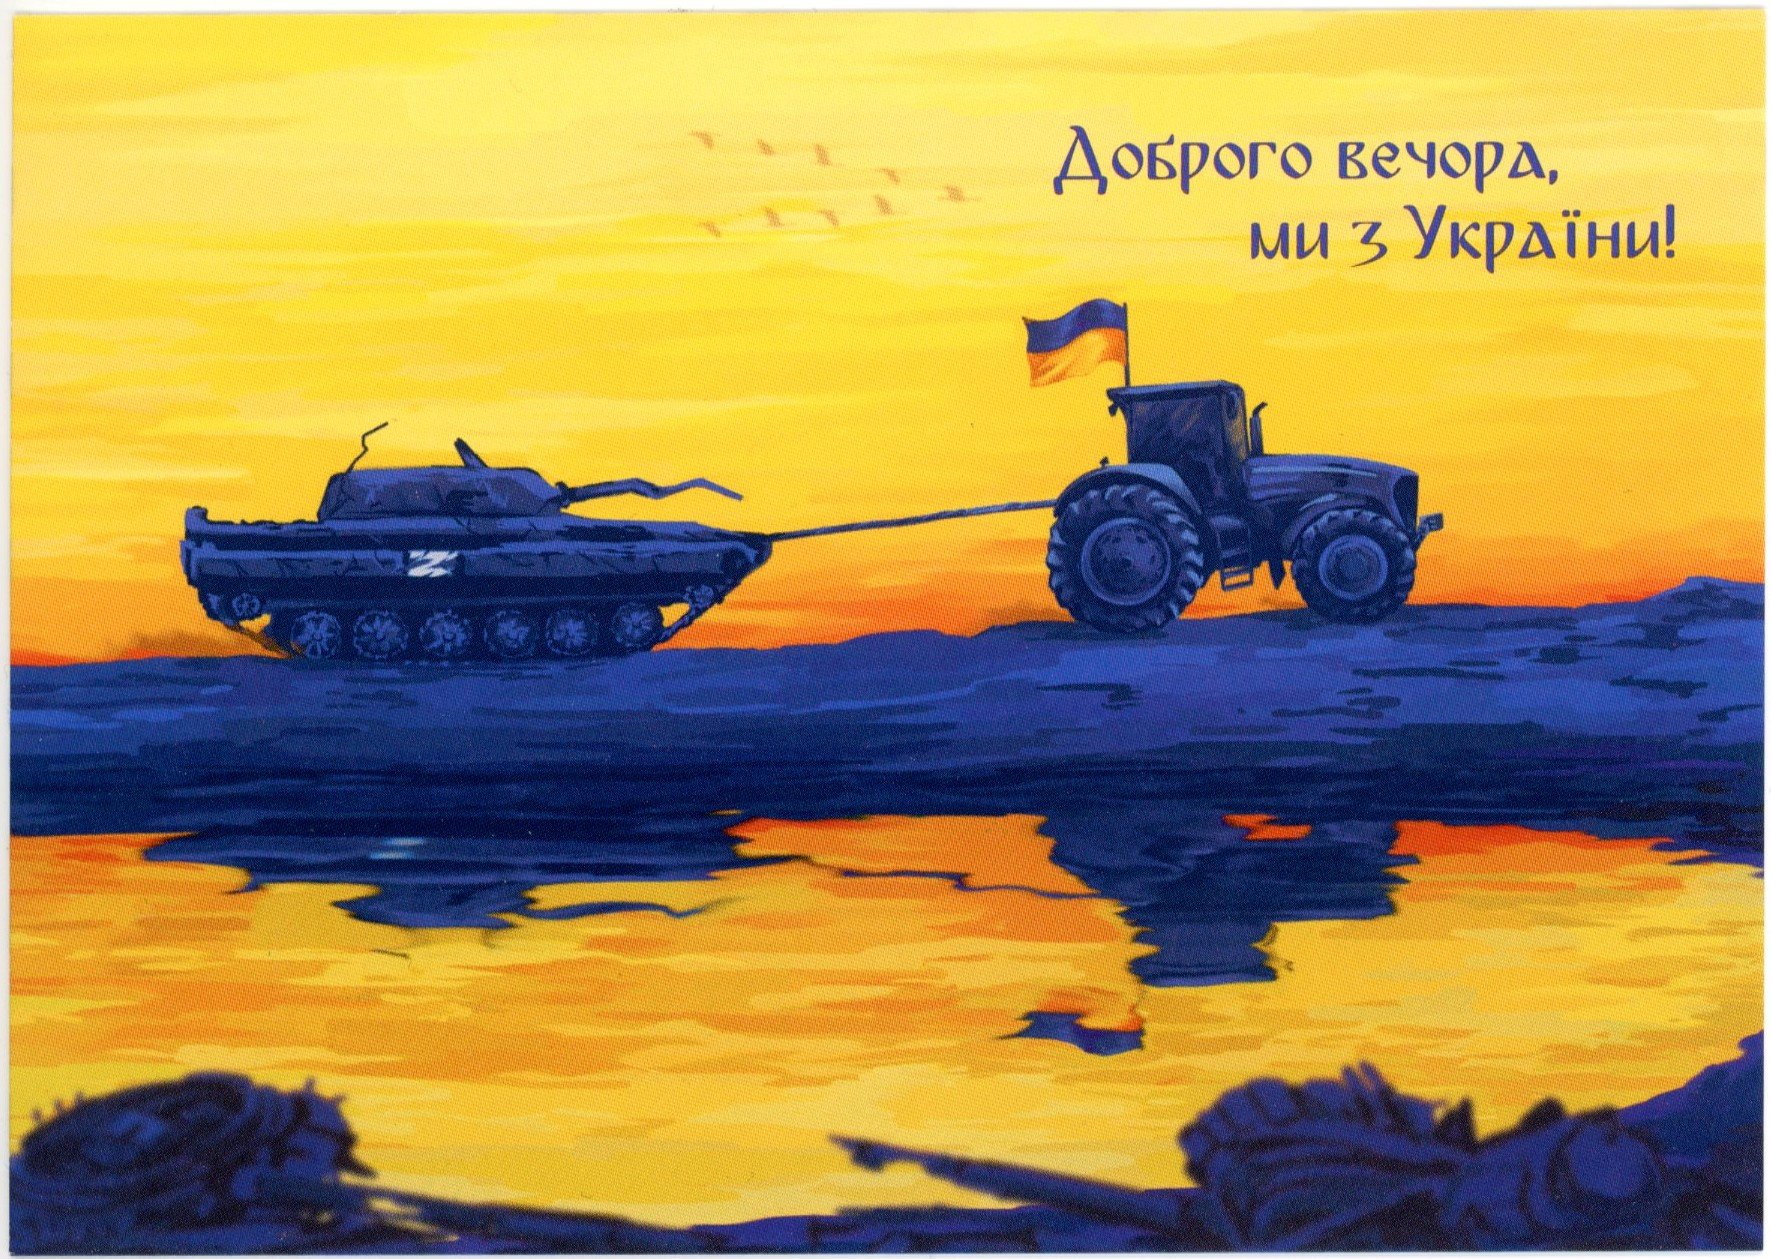 Postkarte "Good evening, we are from Ukraine!", Ukraine, 2022 (Museum Berlin-Karlshorst CC BY-NC-SA)